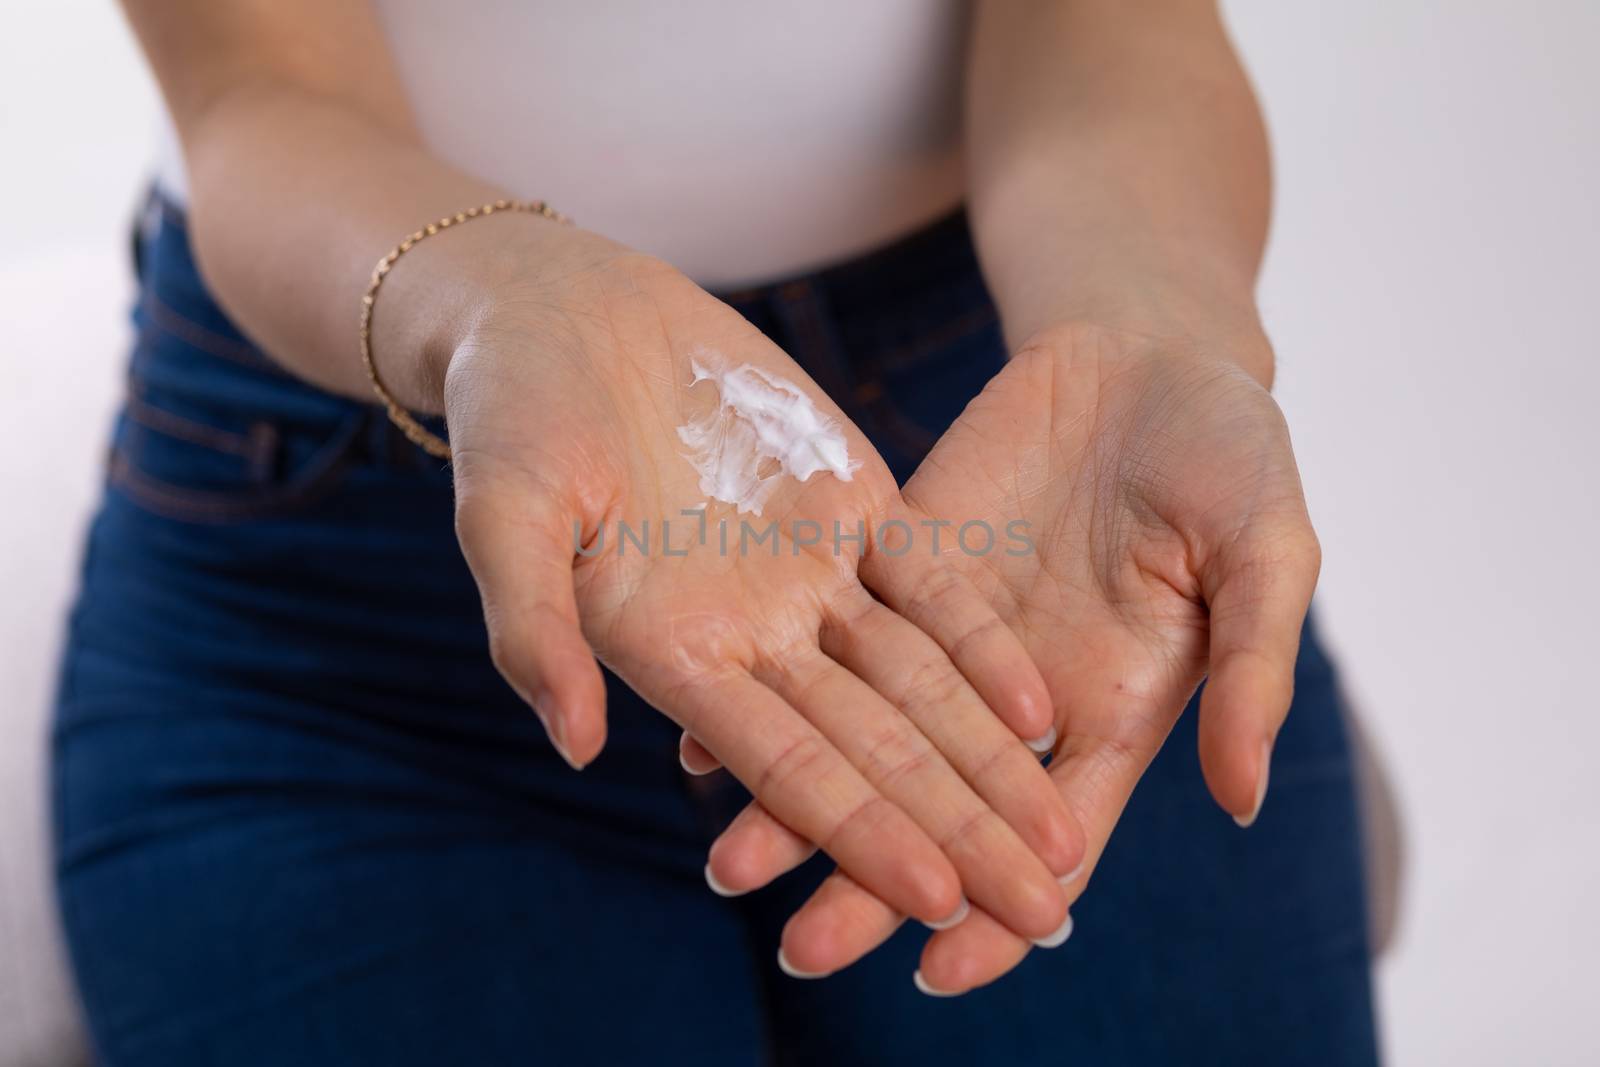 Woman applying hand cream to moisturize skin - stock photo by adamr